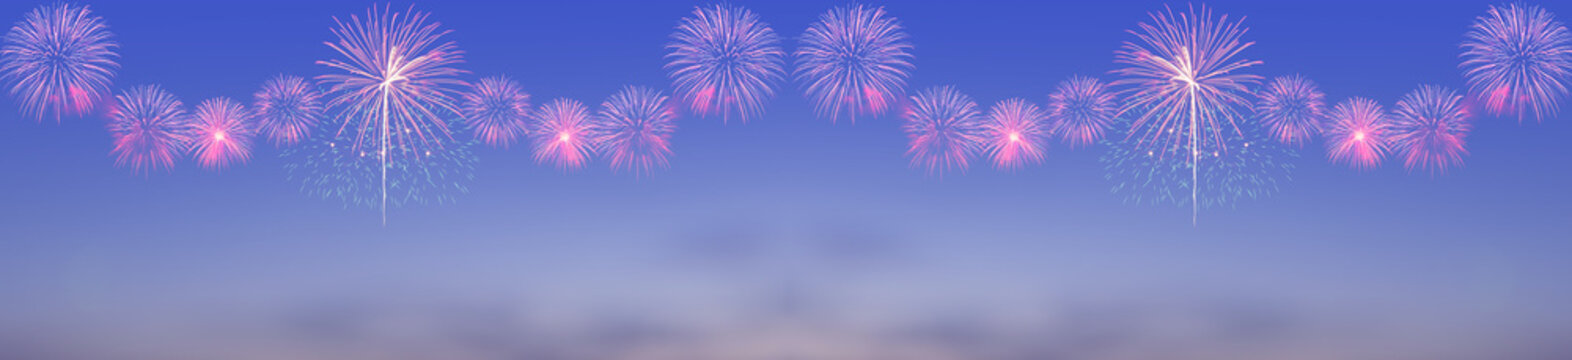 Fireworks on blurred twilight sky background